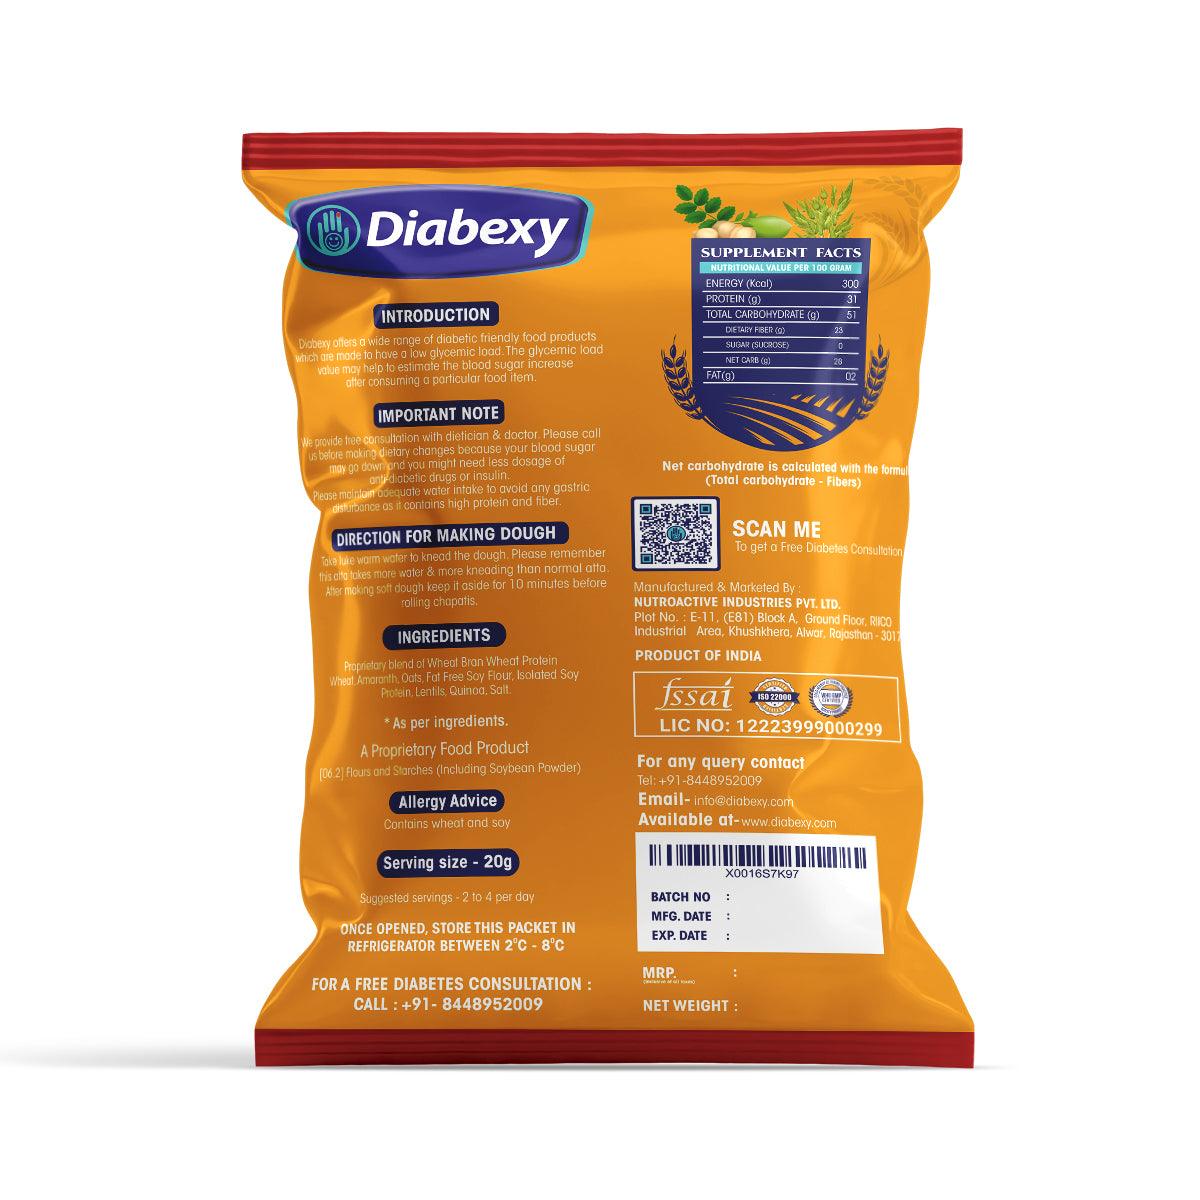 Diabexy Sugar Control Atta LITE Nuts Free - Diabexy